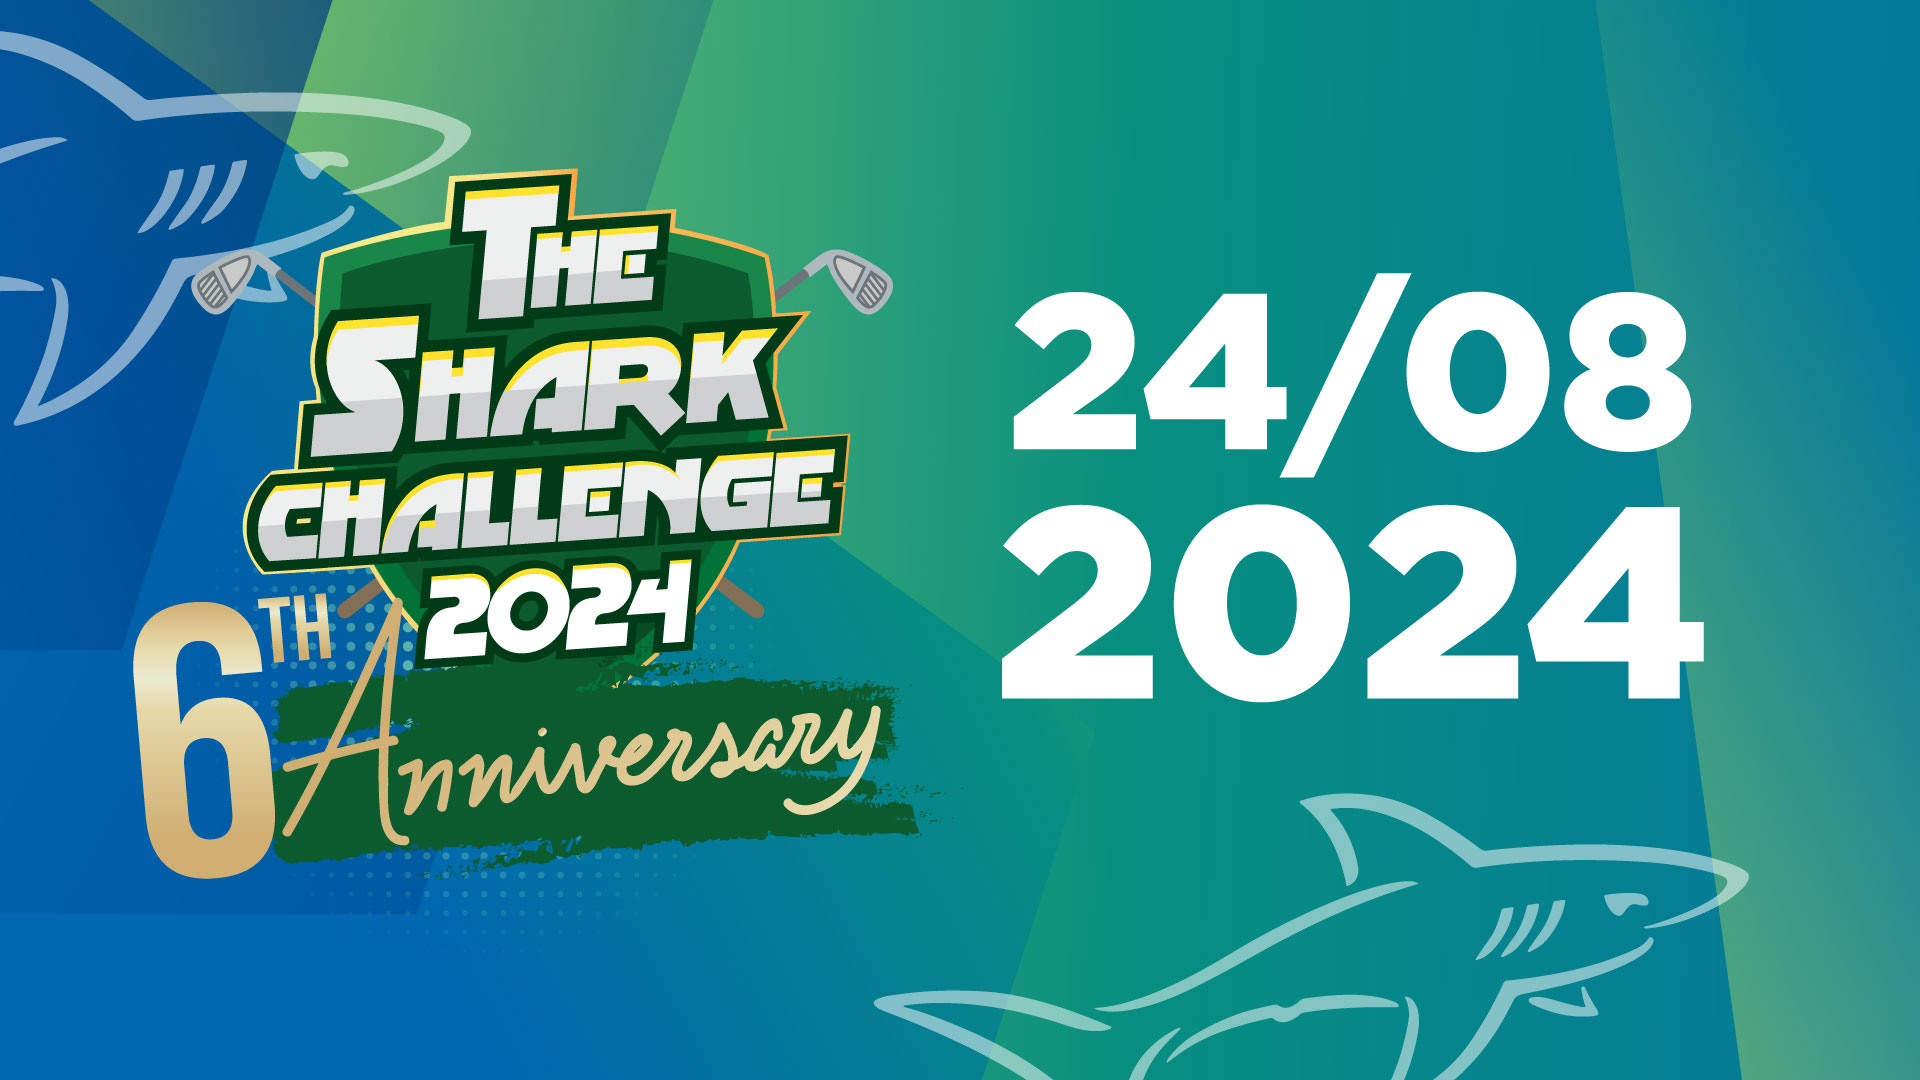 WELCOME THE SHARK CHALLENGE 2024!